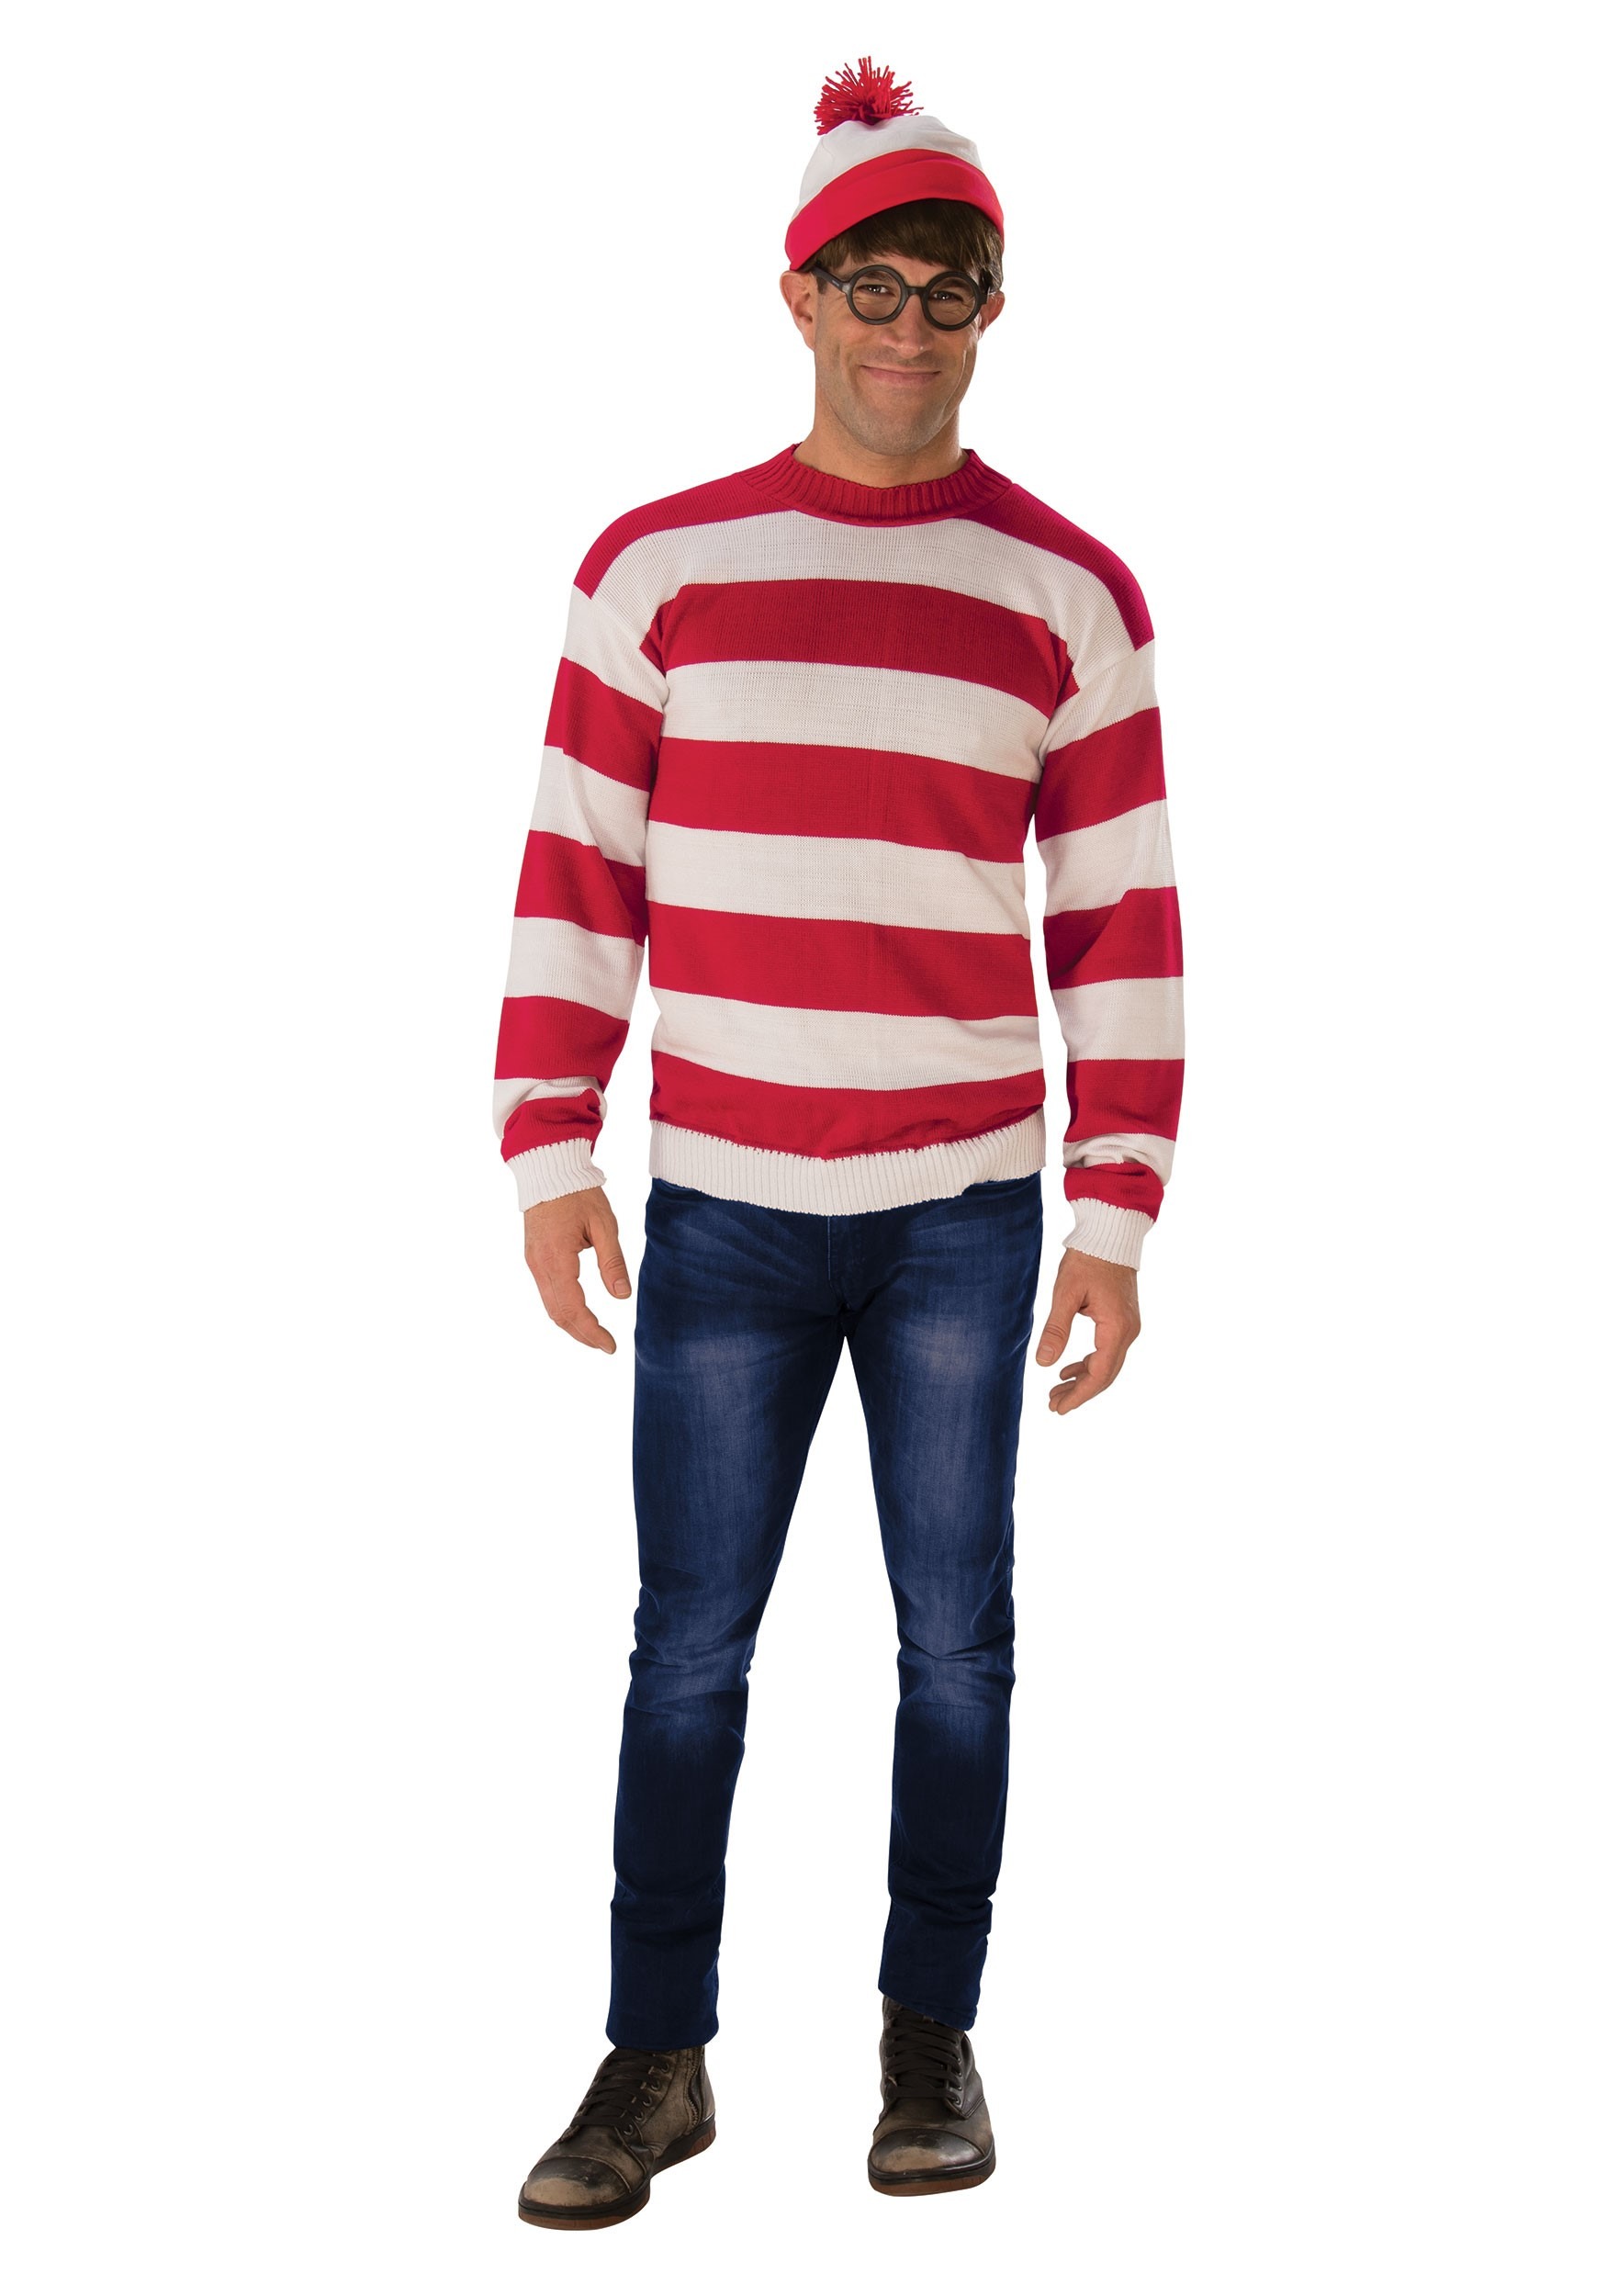 Where’s Waldo Deluxe Adult Costume